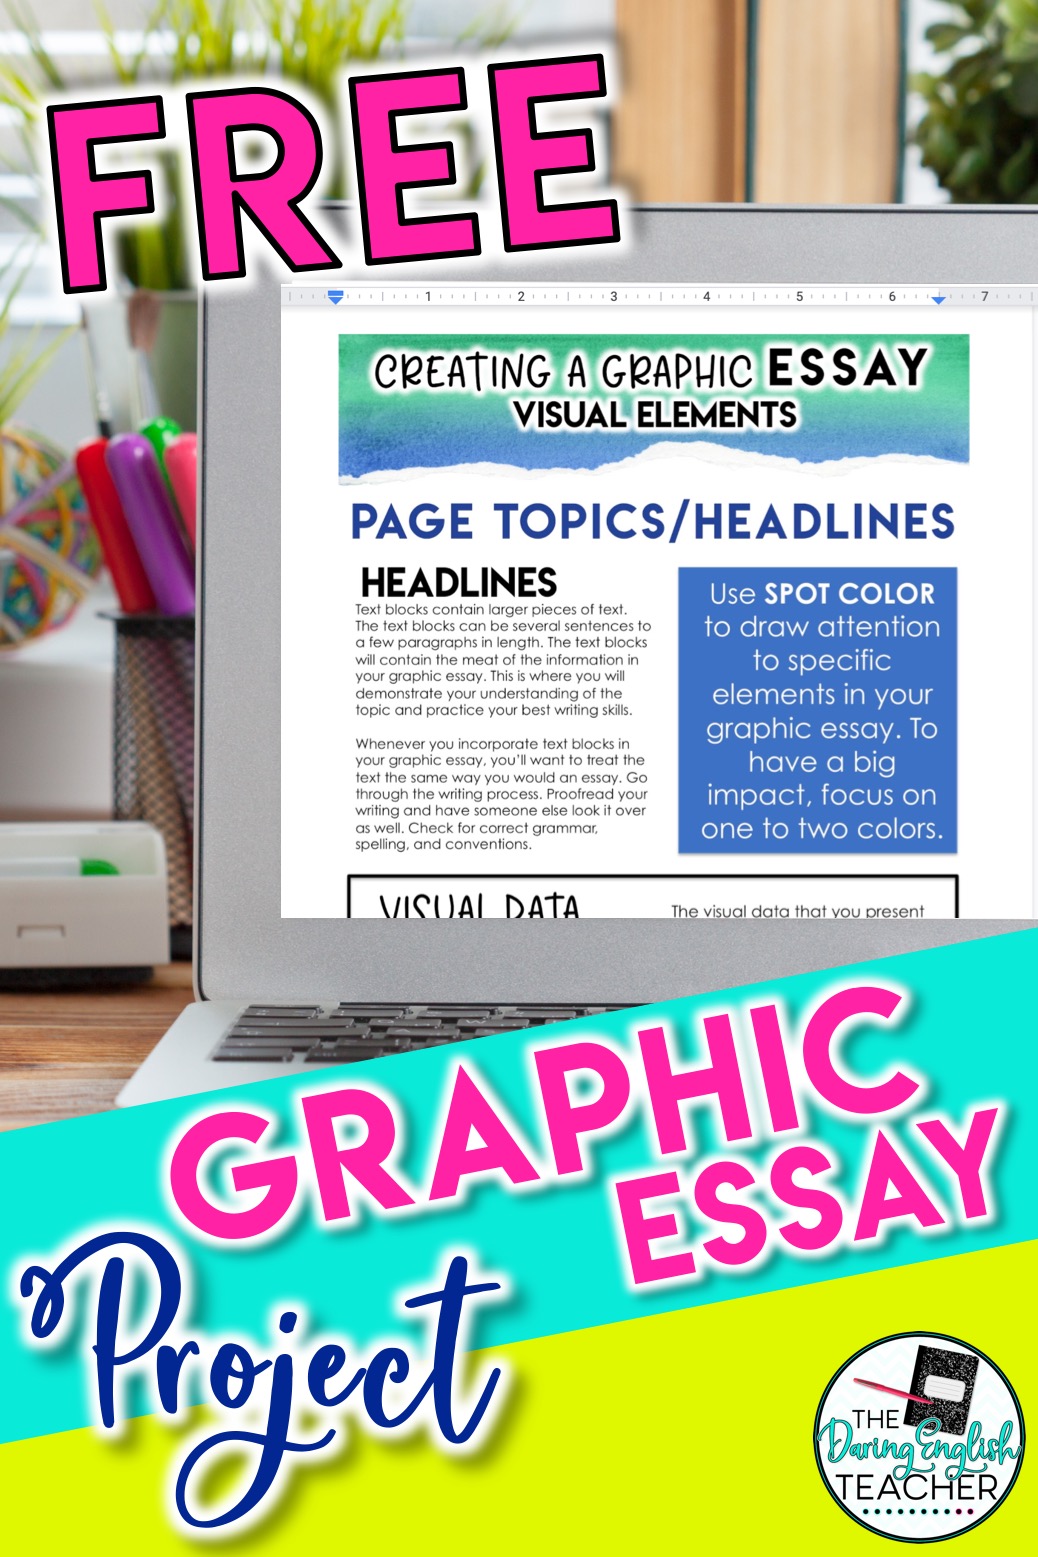 elements of graphic design essay